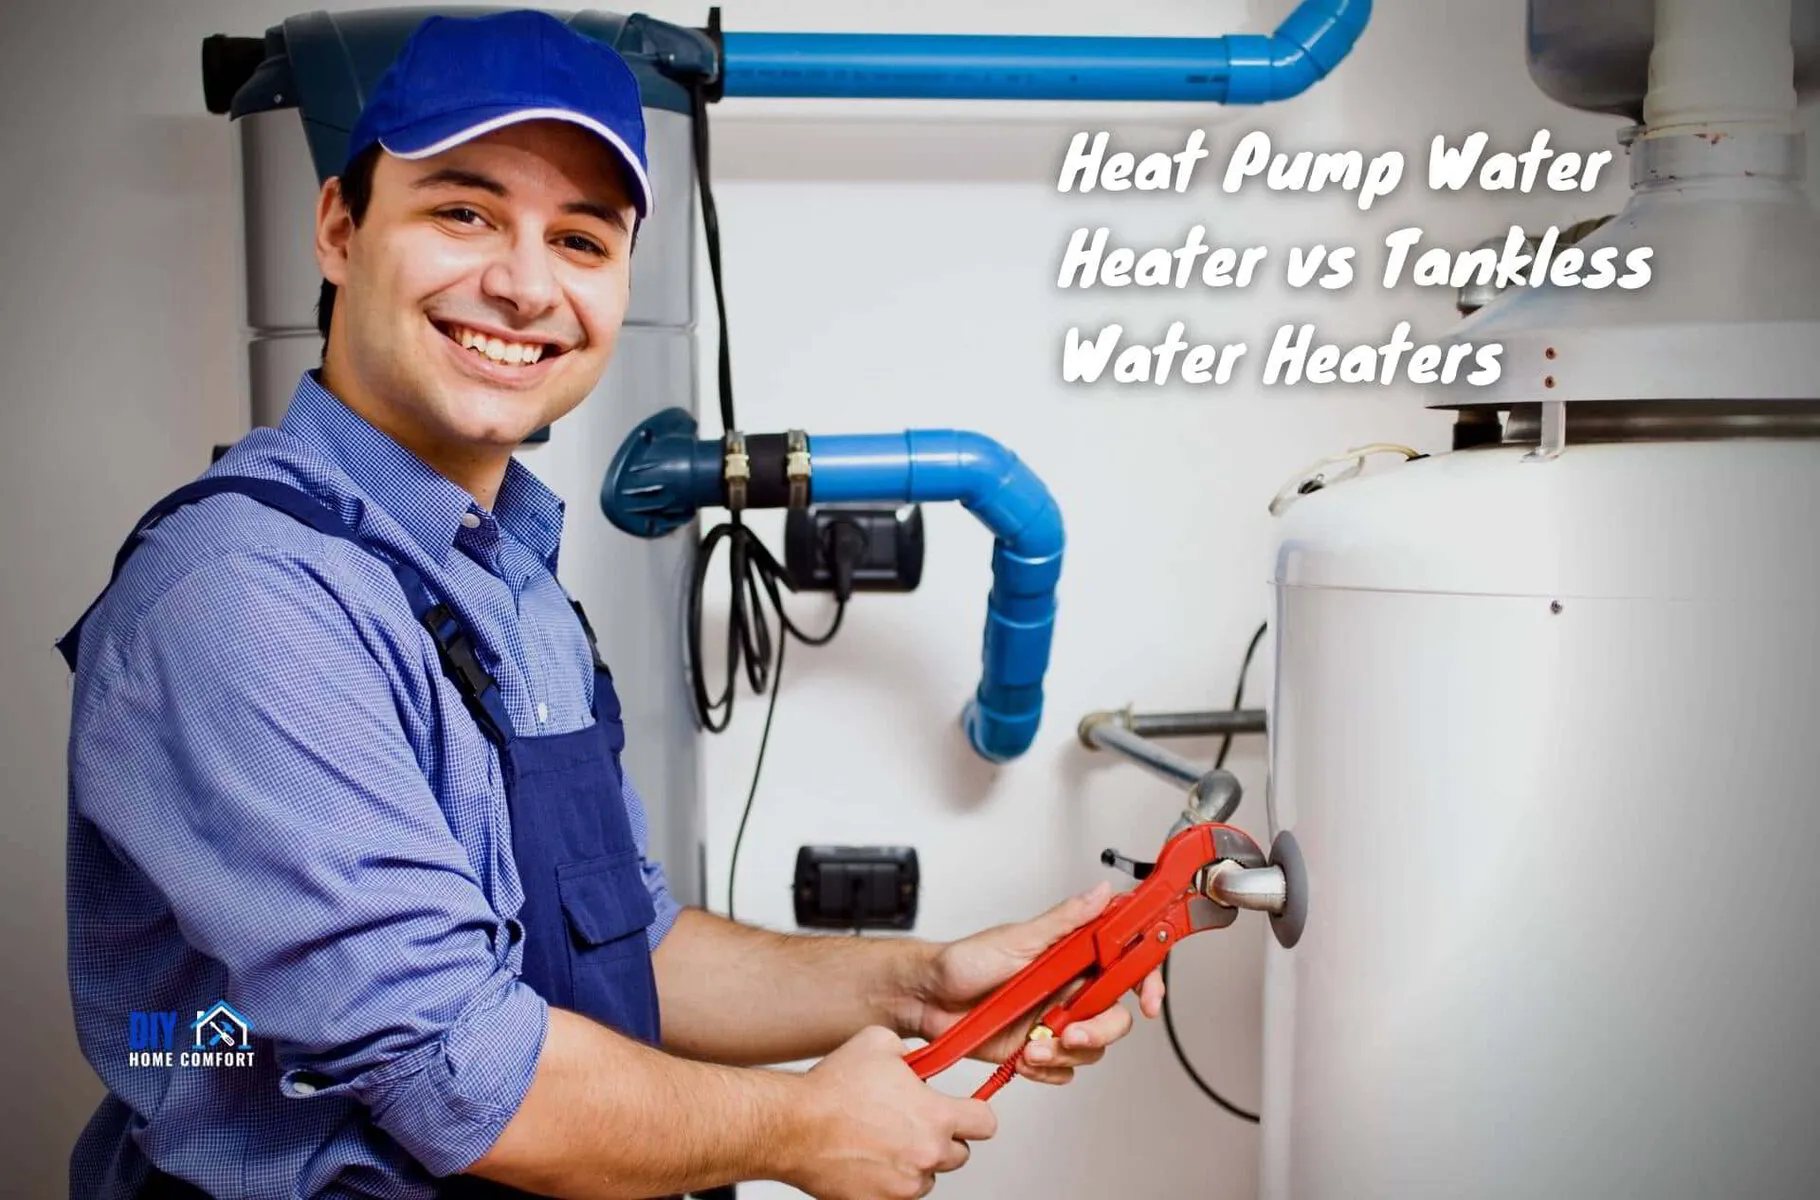 Heat Pump Water Heater vs Tankless Water Heaters | DIY Home Comfort